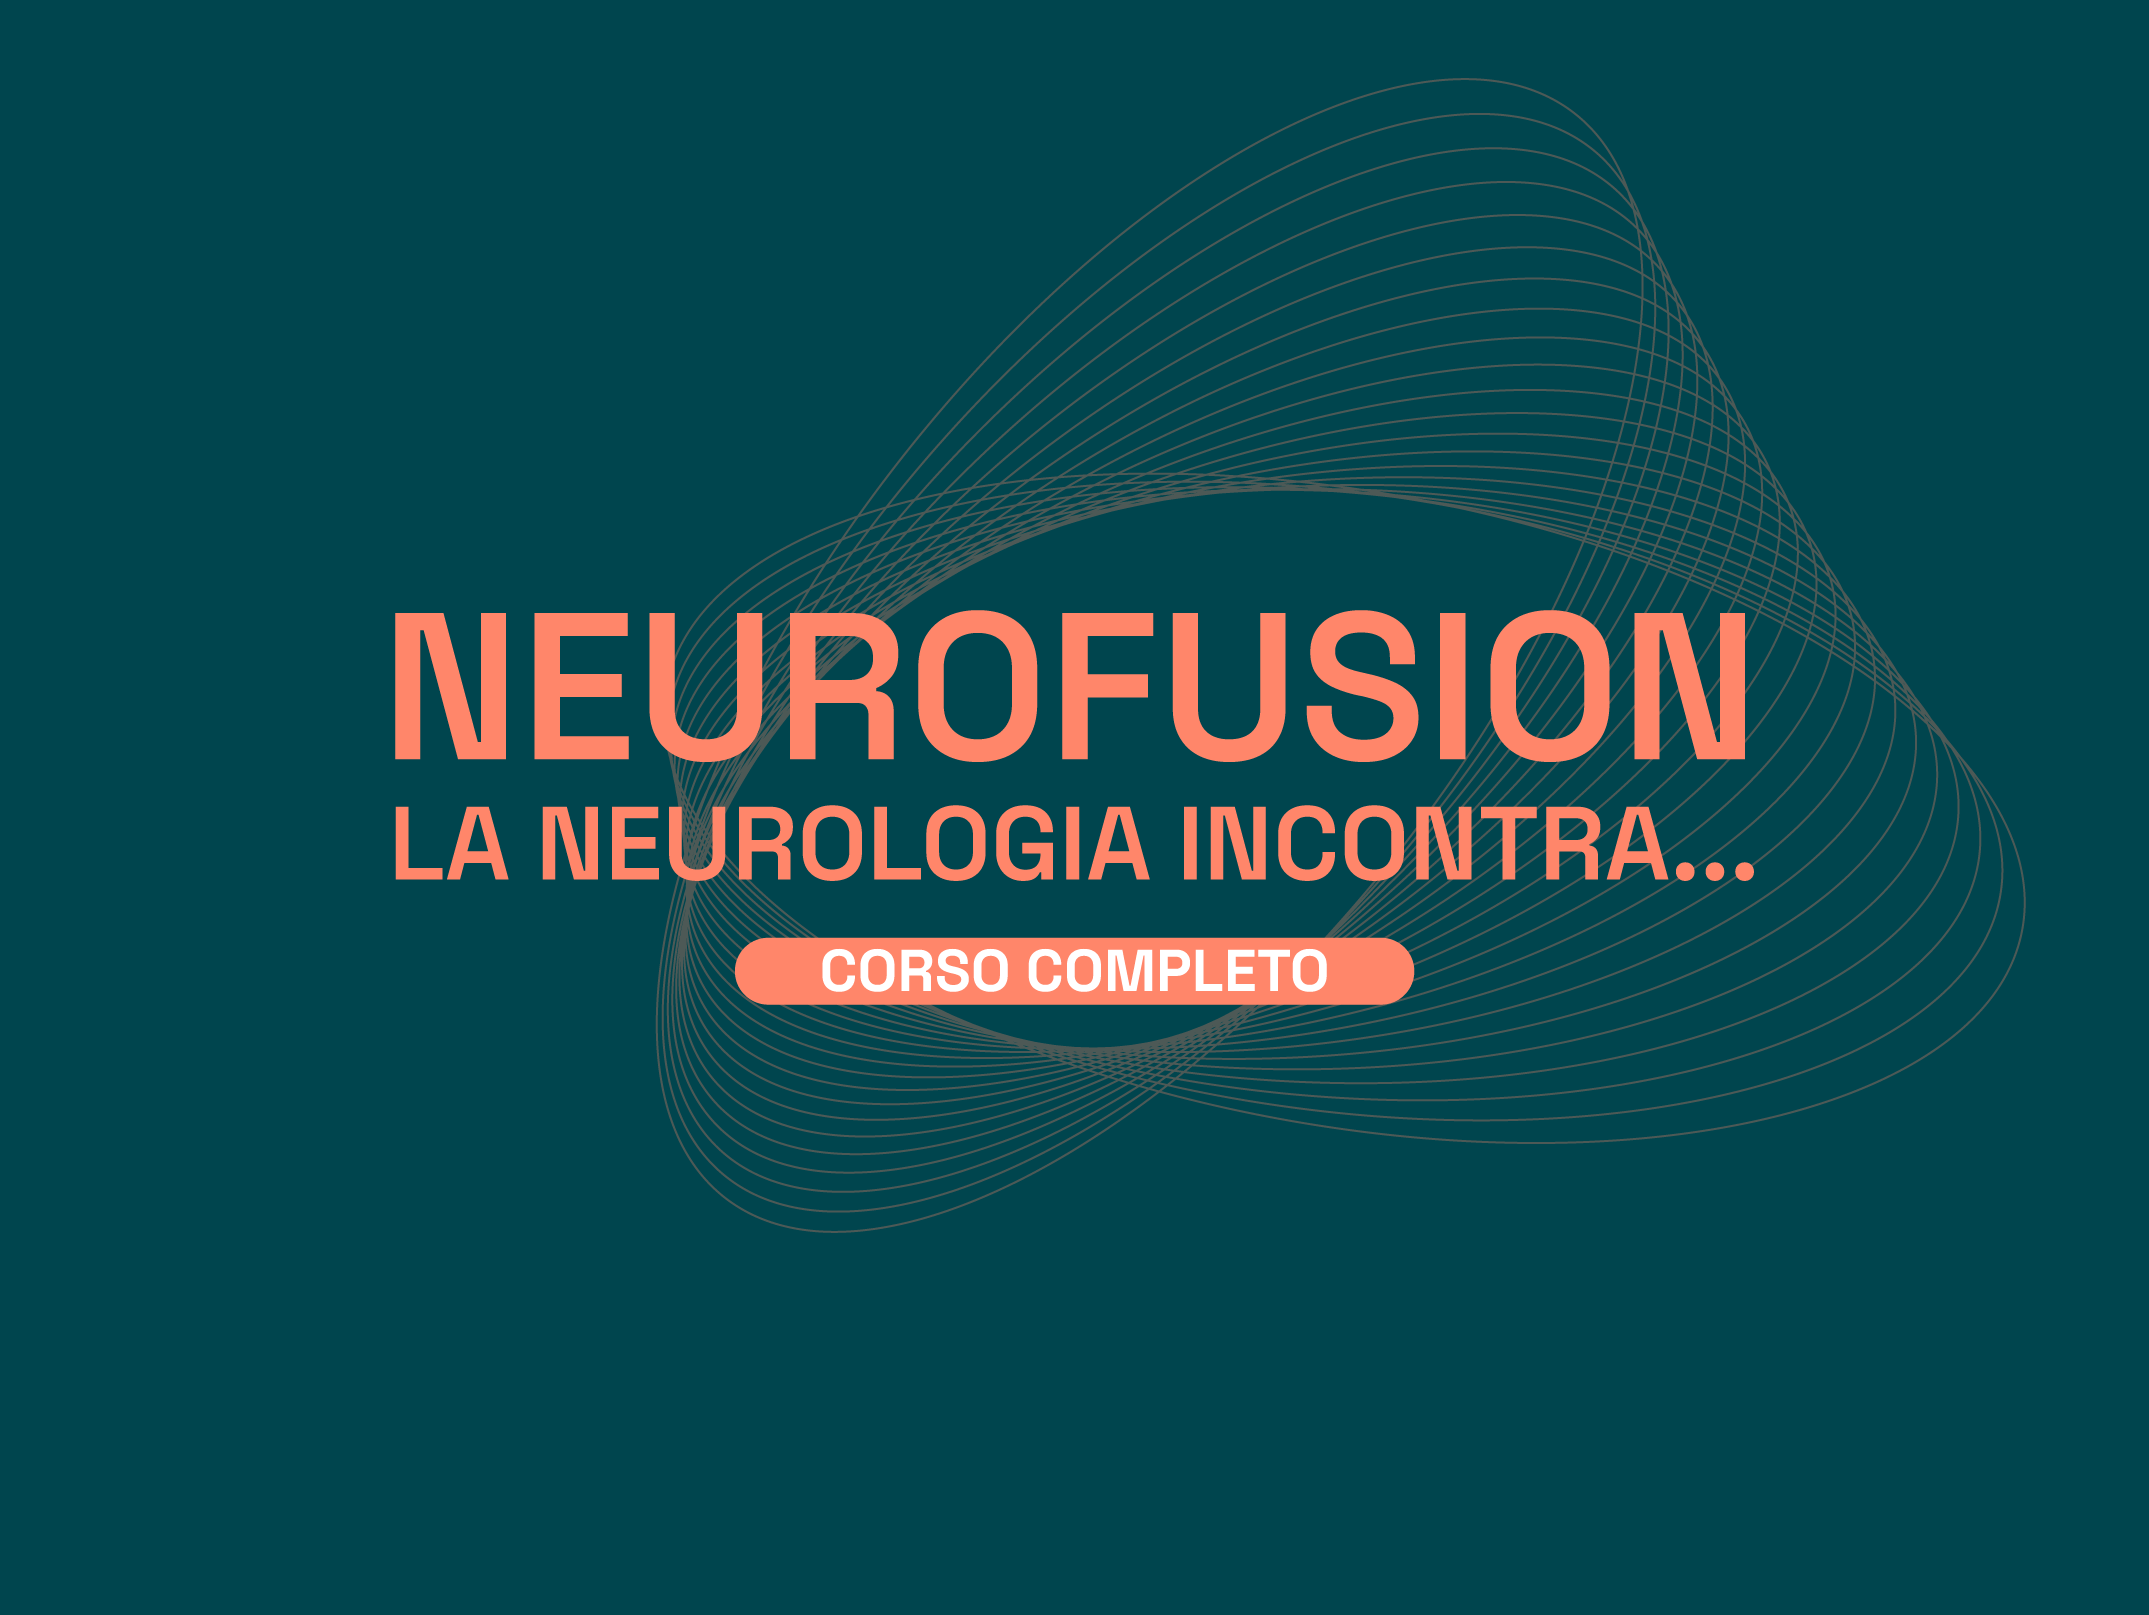 NEUROFUSION: la neurologia incontra...